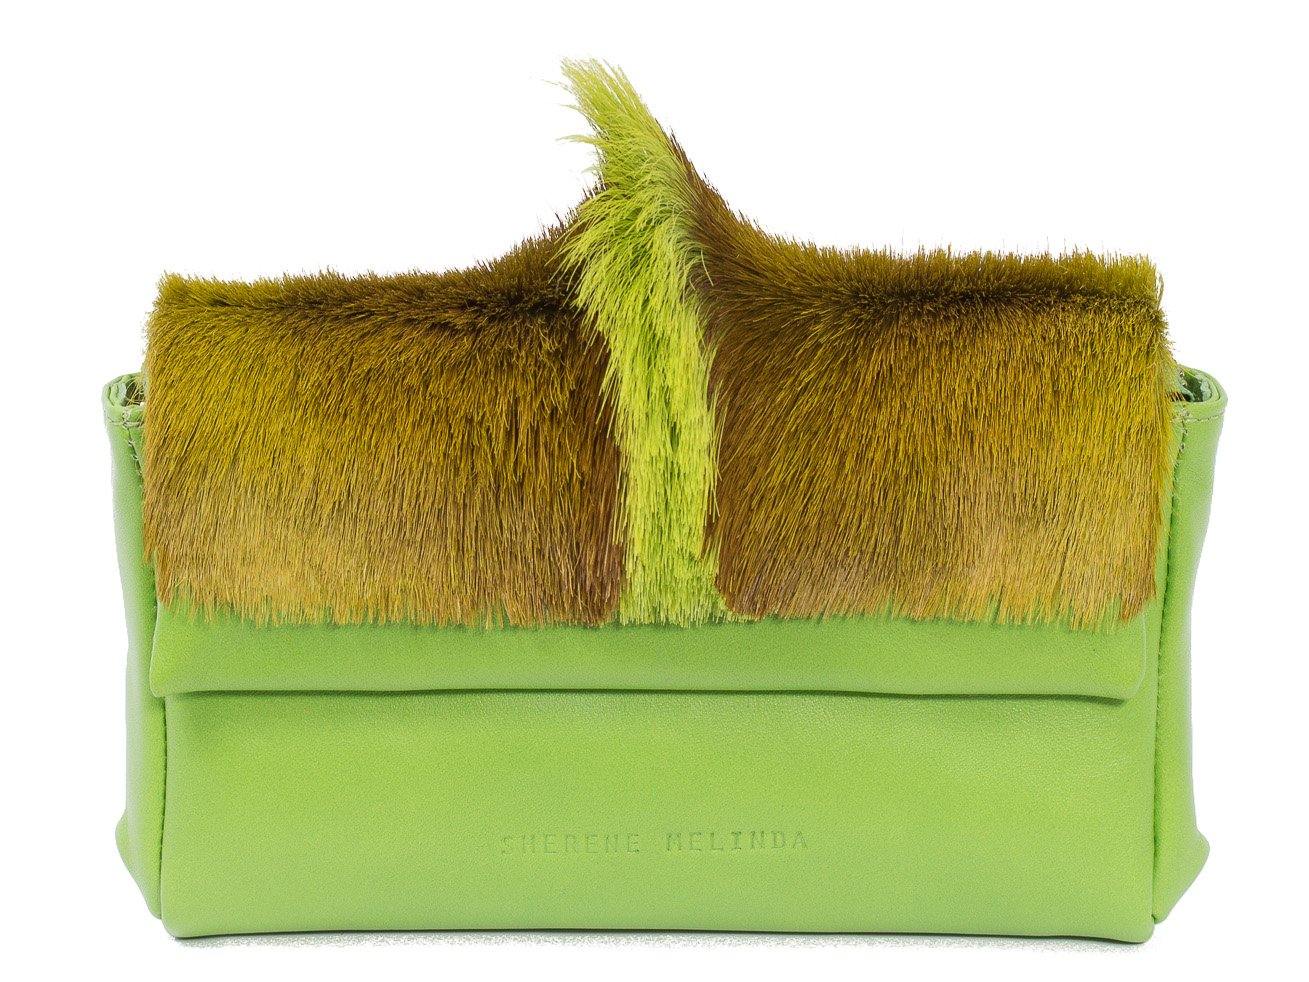 sherene melinda springbok hair-on-hide lime green leather Sophy SS18 Clutch Bag Fan front